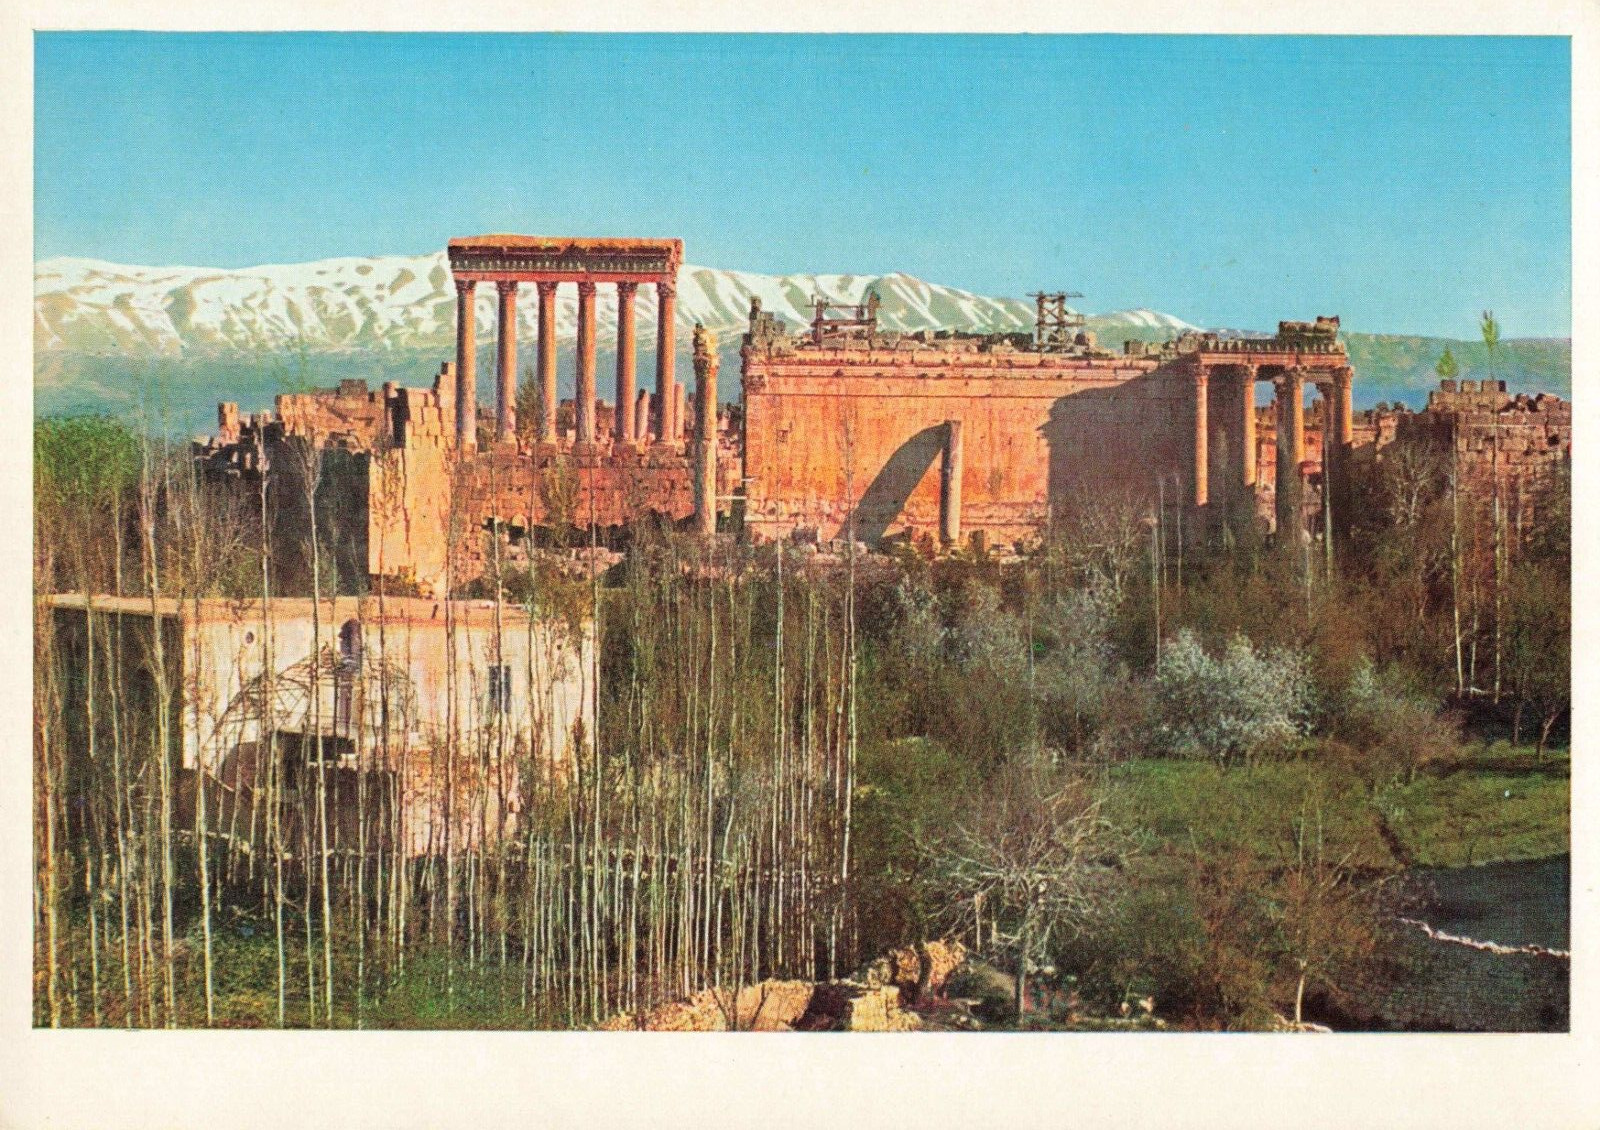 Baalbek Lebanon, Acropolis Temples Ruins View from Palmyra Hotel, VTG Postcard